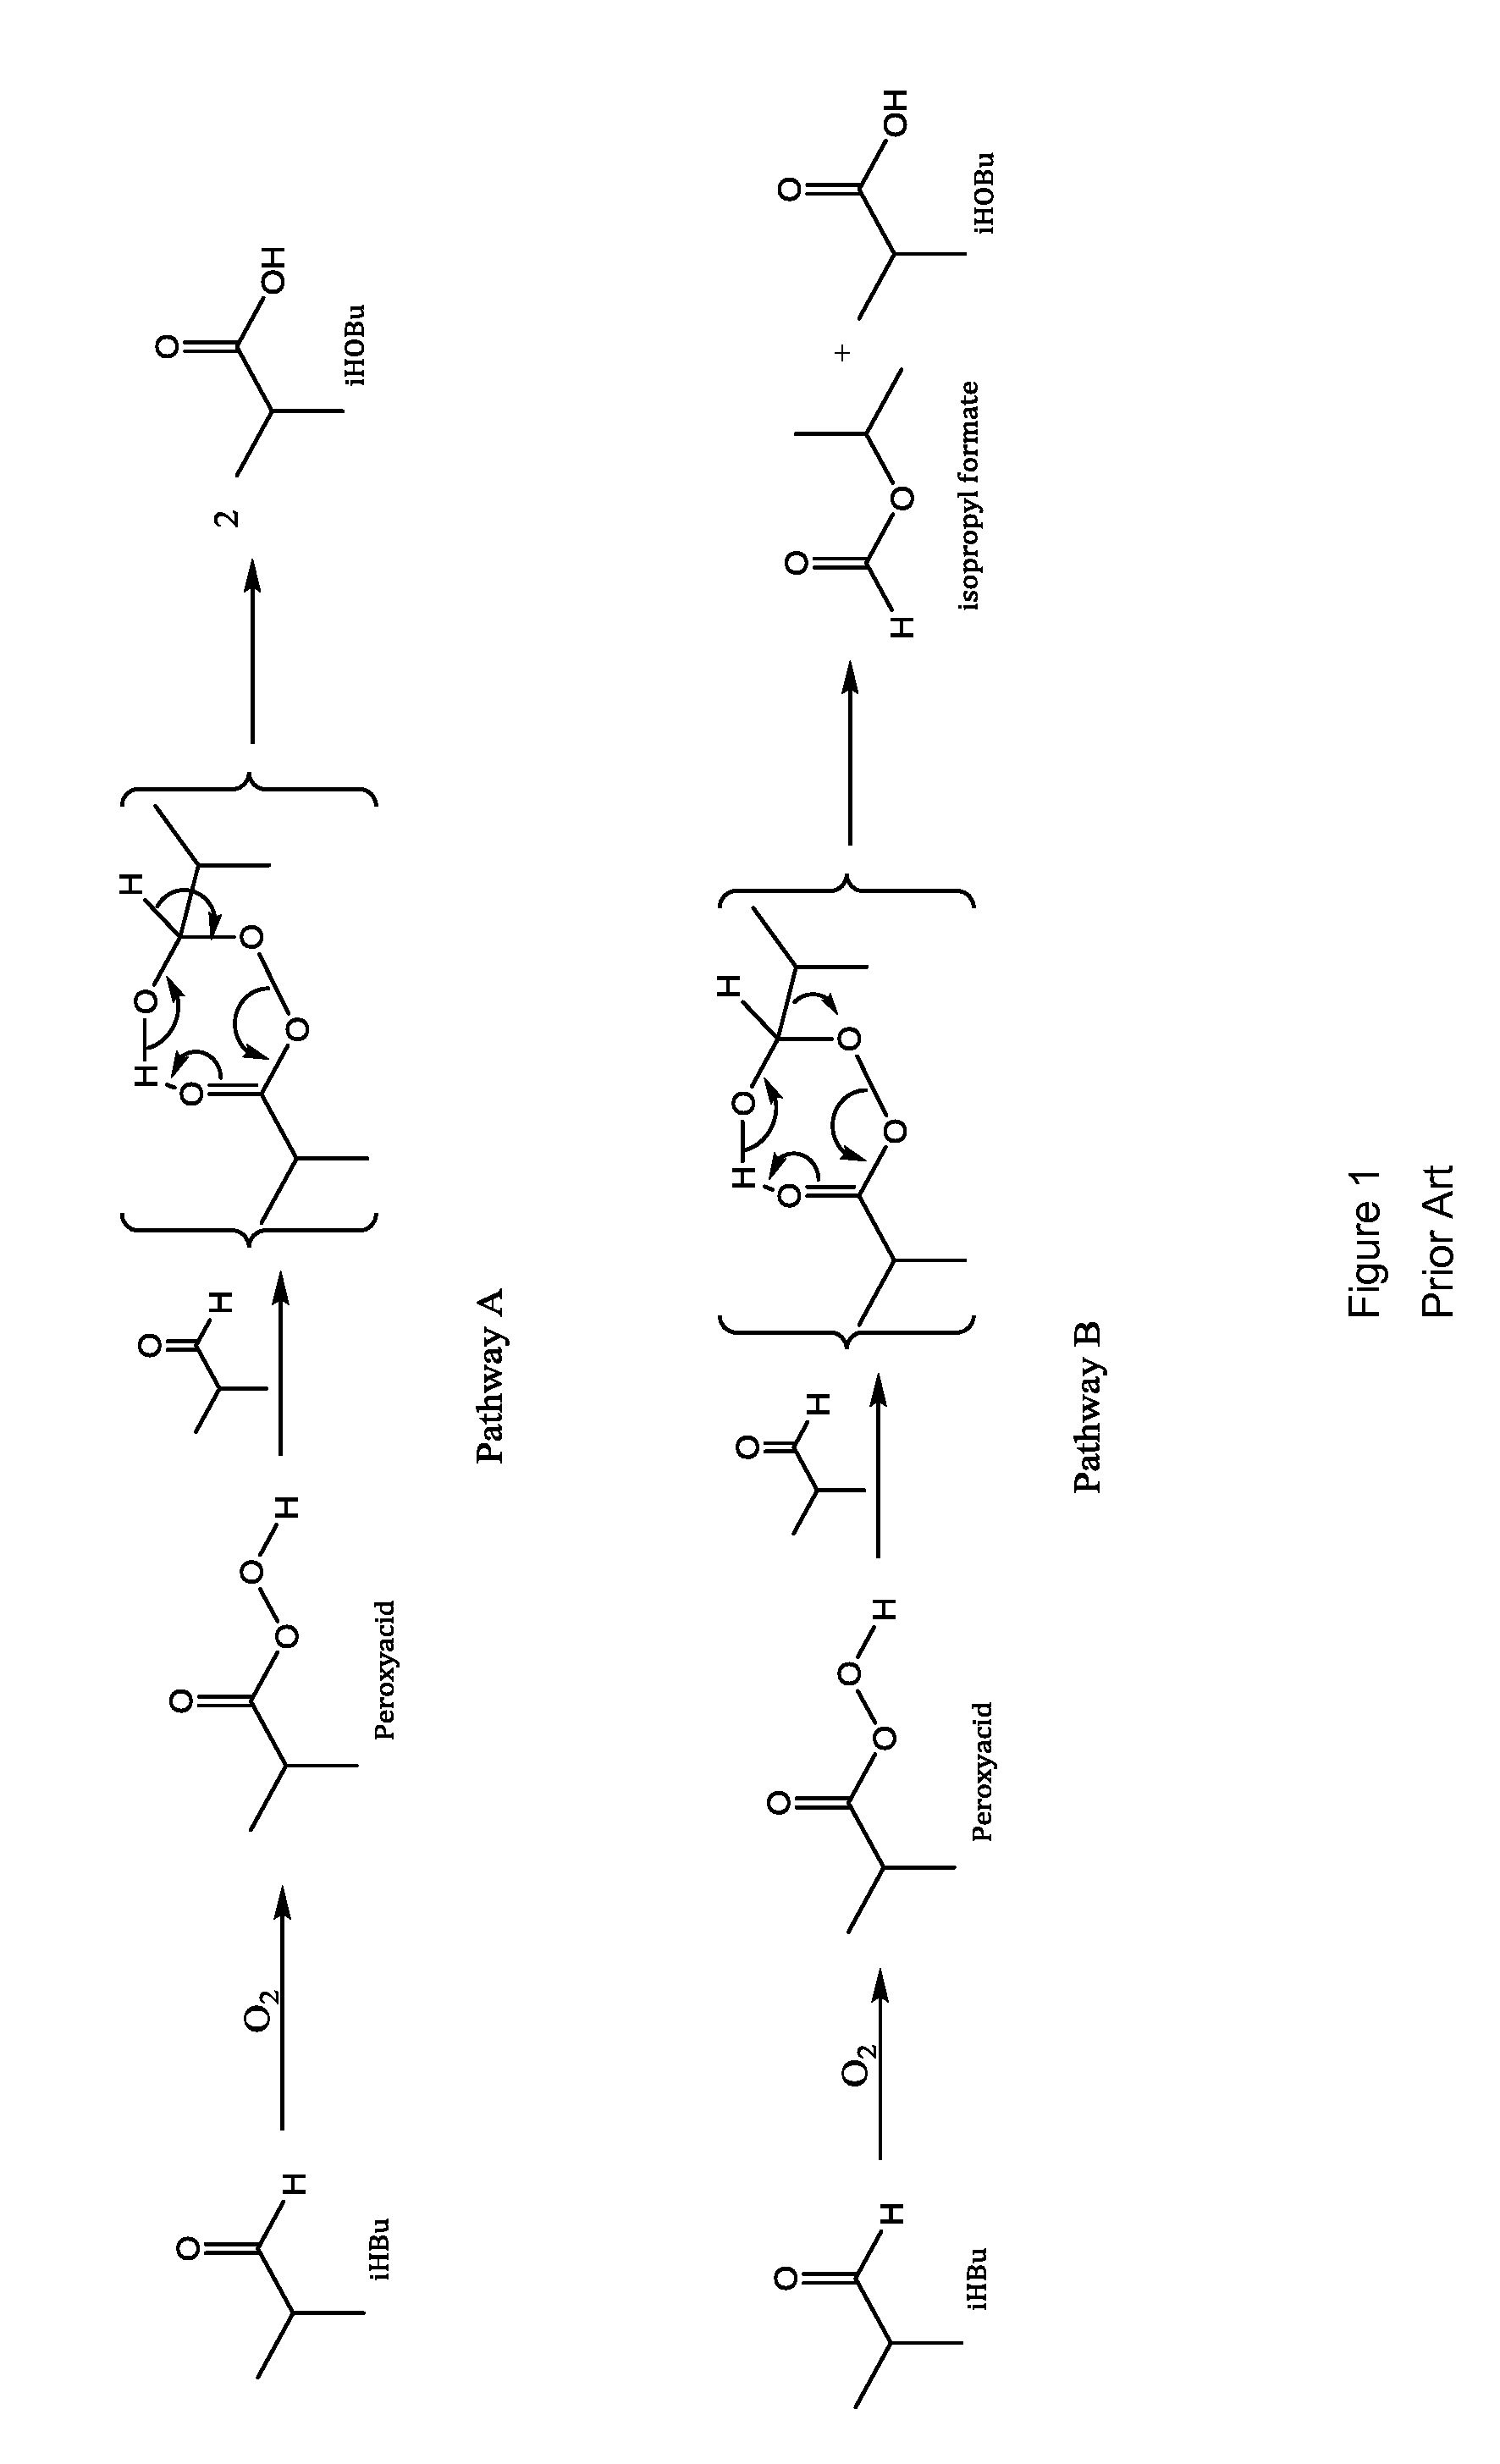 Aldehyde oxidation processes